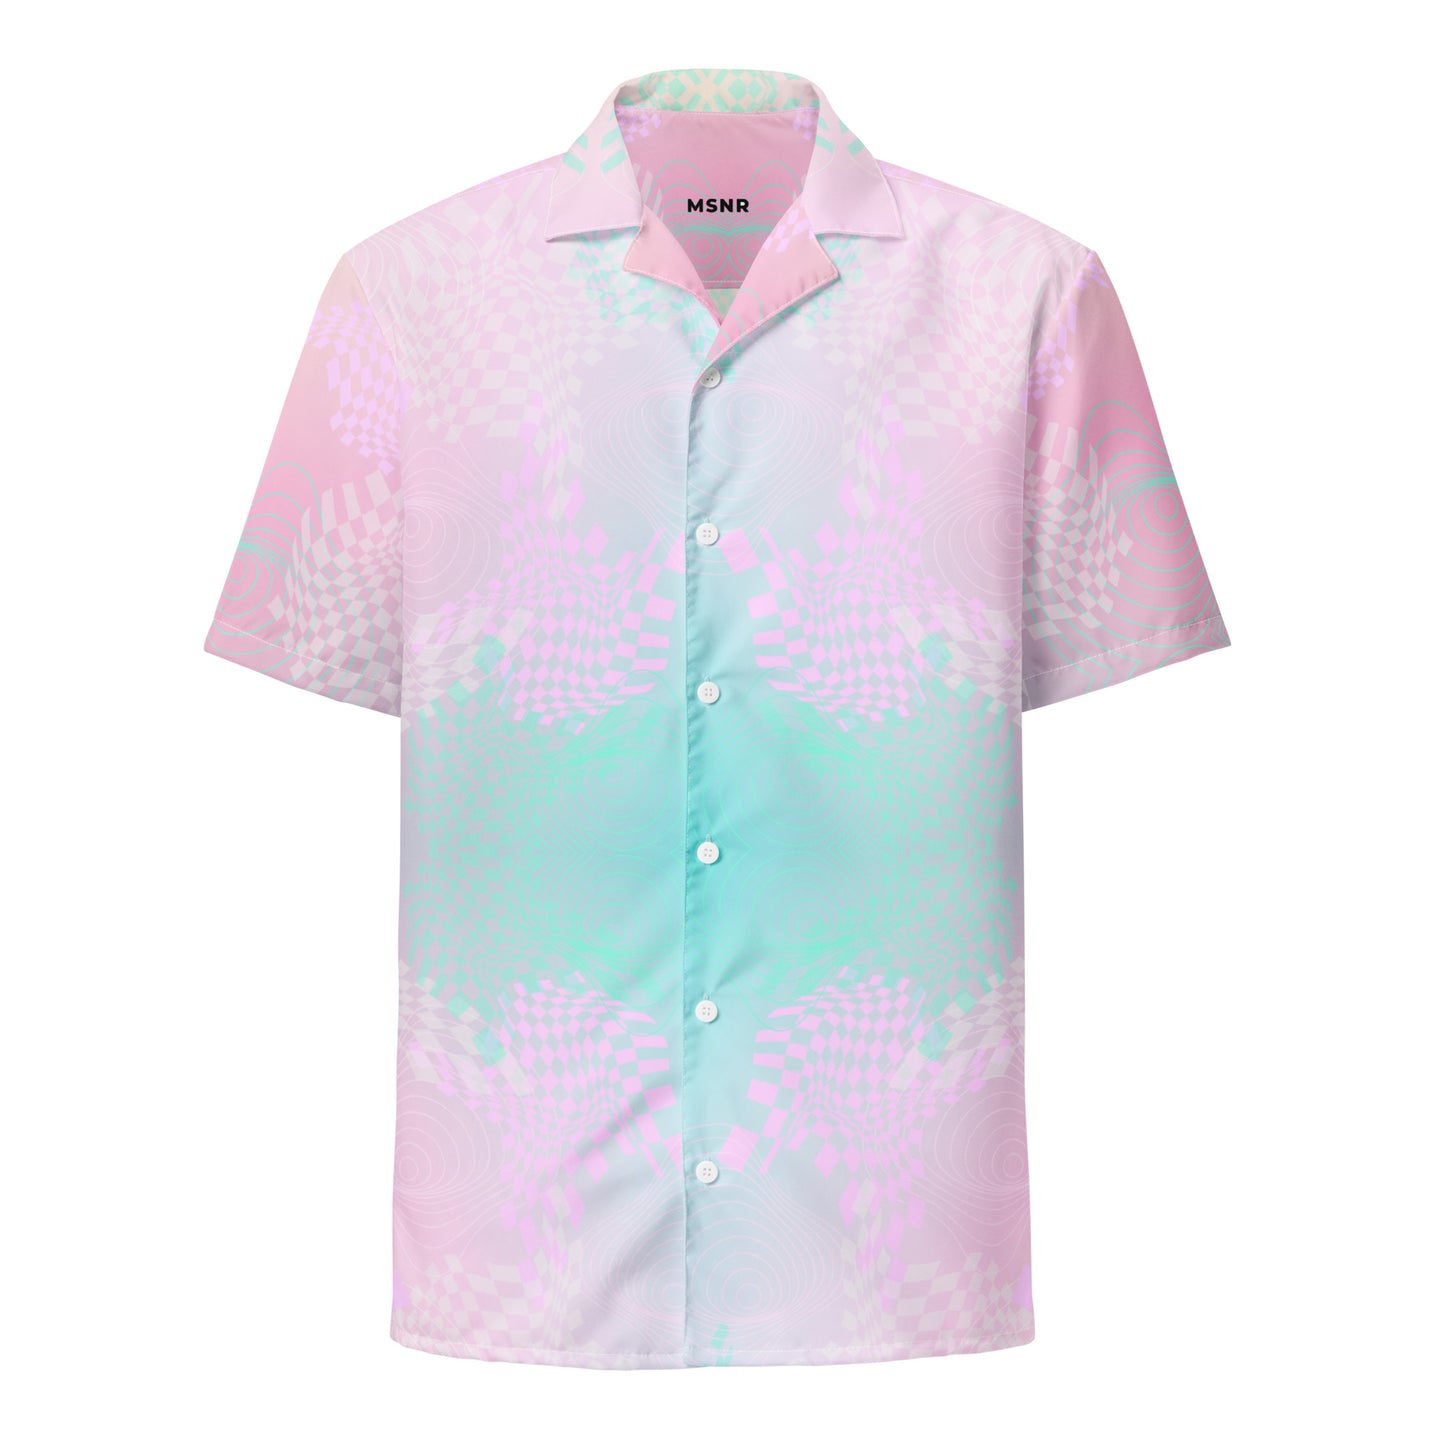 Cotton Candy Men's Hawaiian Shirt